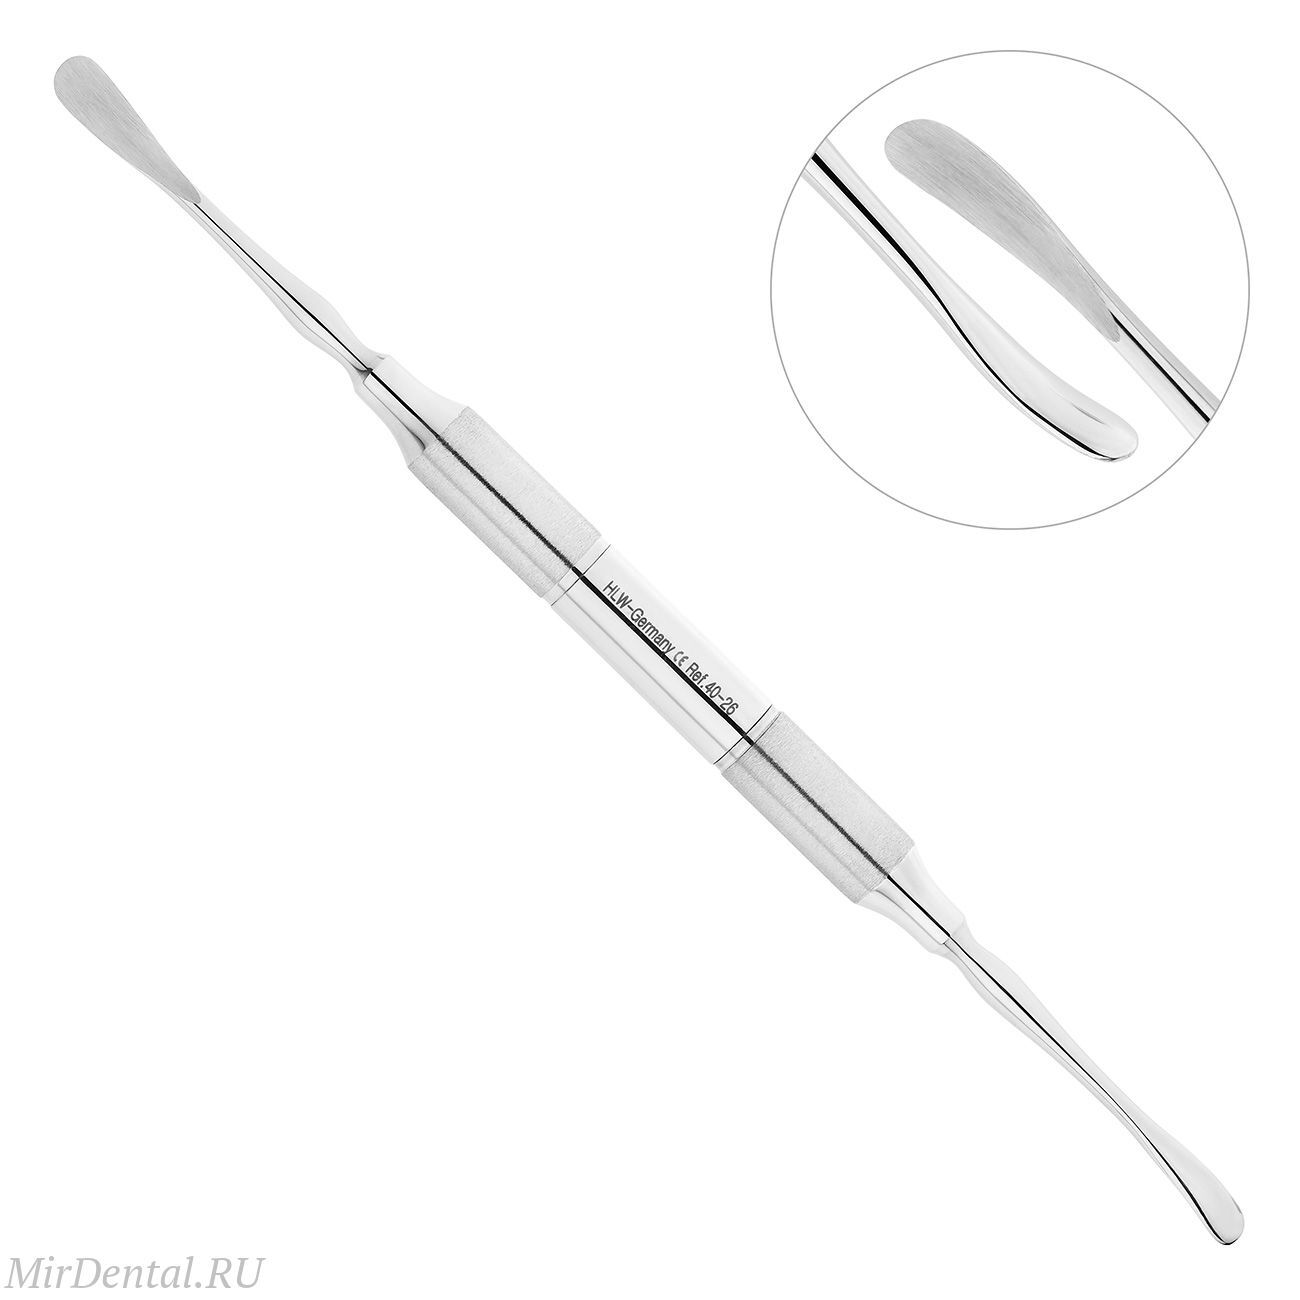 Распатор Freer, ручка DELUXE, диаметр 10 мм, острый/тупой, 5,0-6,0 мм, 40-26*